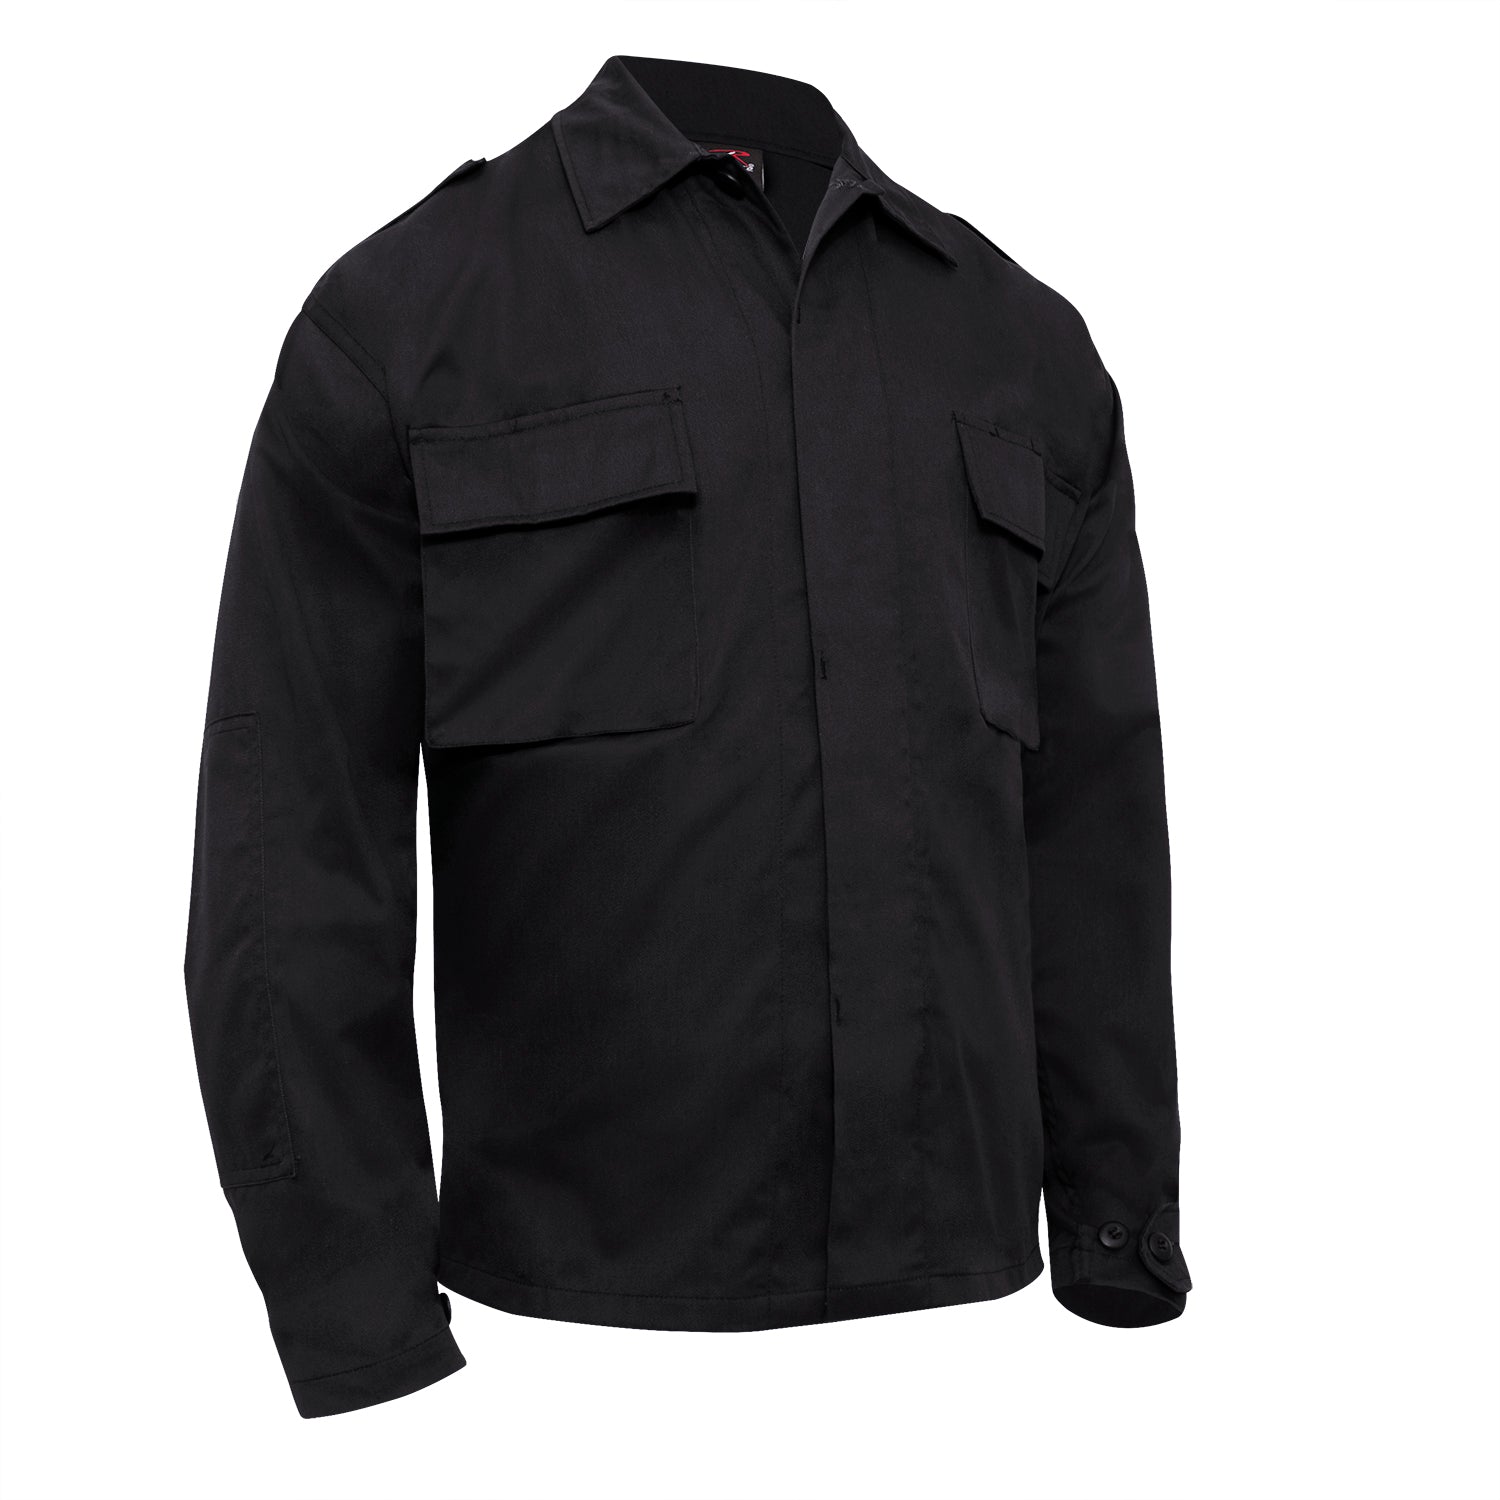 Rothco Tactical 2 Pocket BDU (Battle Dress Uniform) Shirt Black ...